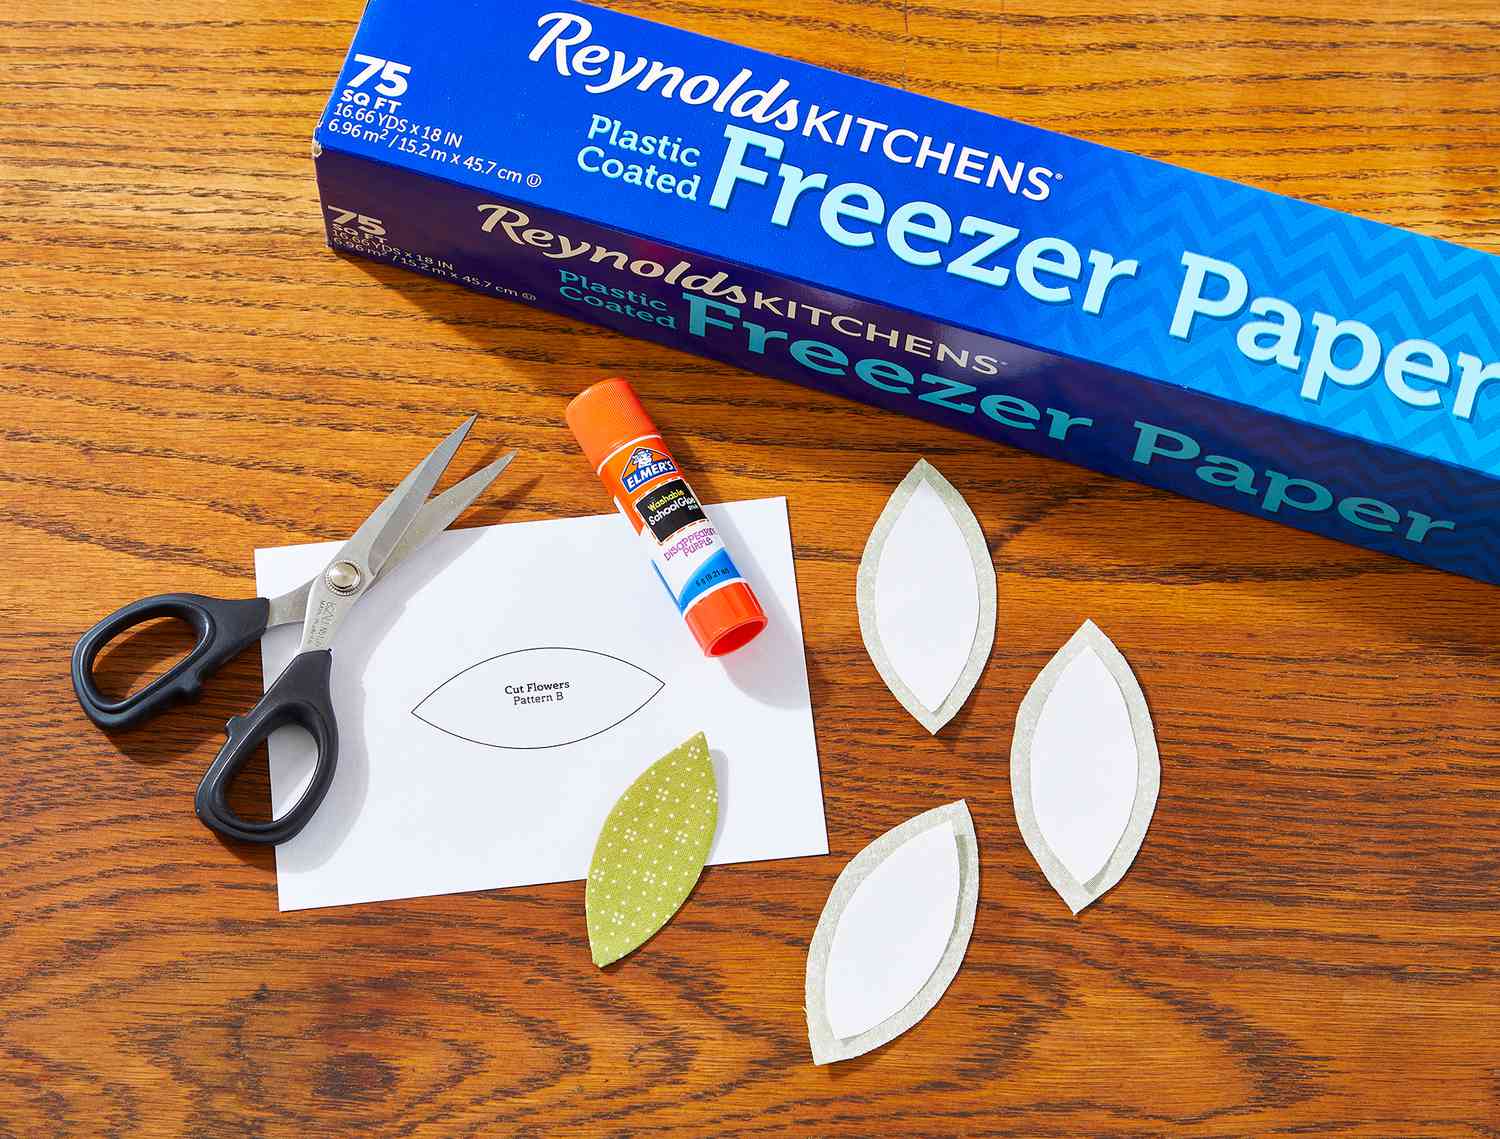 Reynolds Kitchens Plastic Coated Freezer Paper - 75 Square Feet